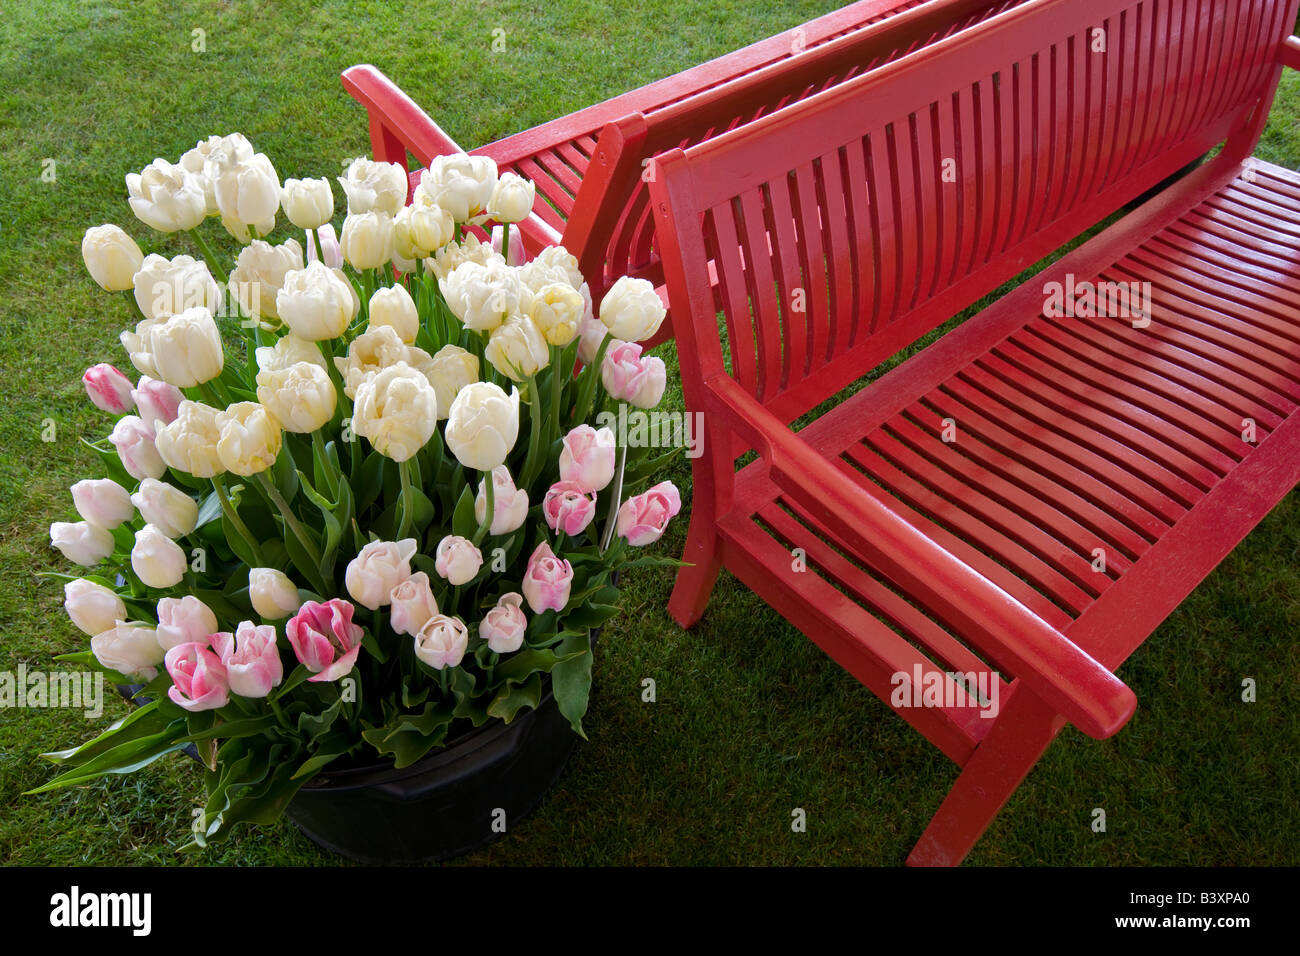 Töpfe mit Tulpen Blumen und Sitzbank aus Holz Schuh Tulip Farm Oregon Stockfoto